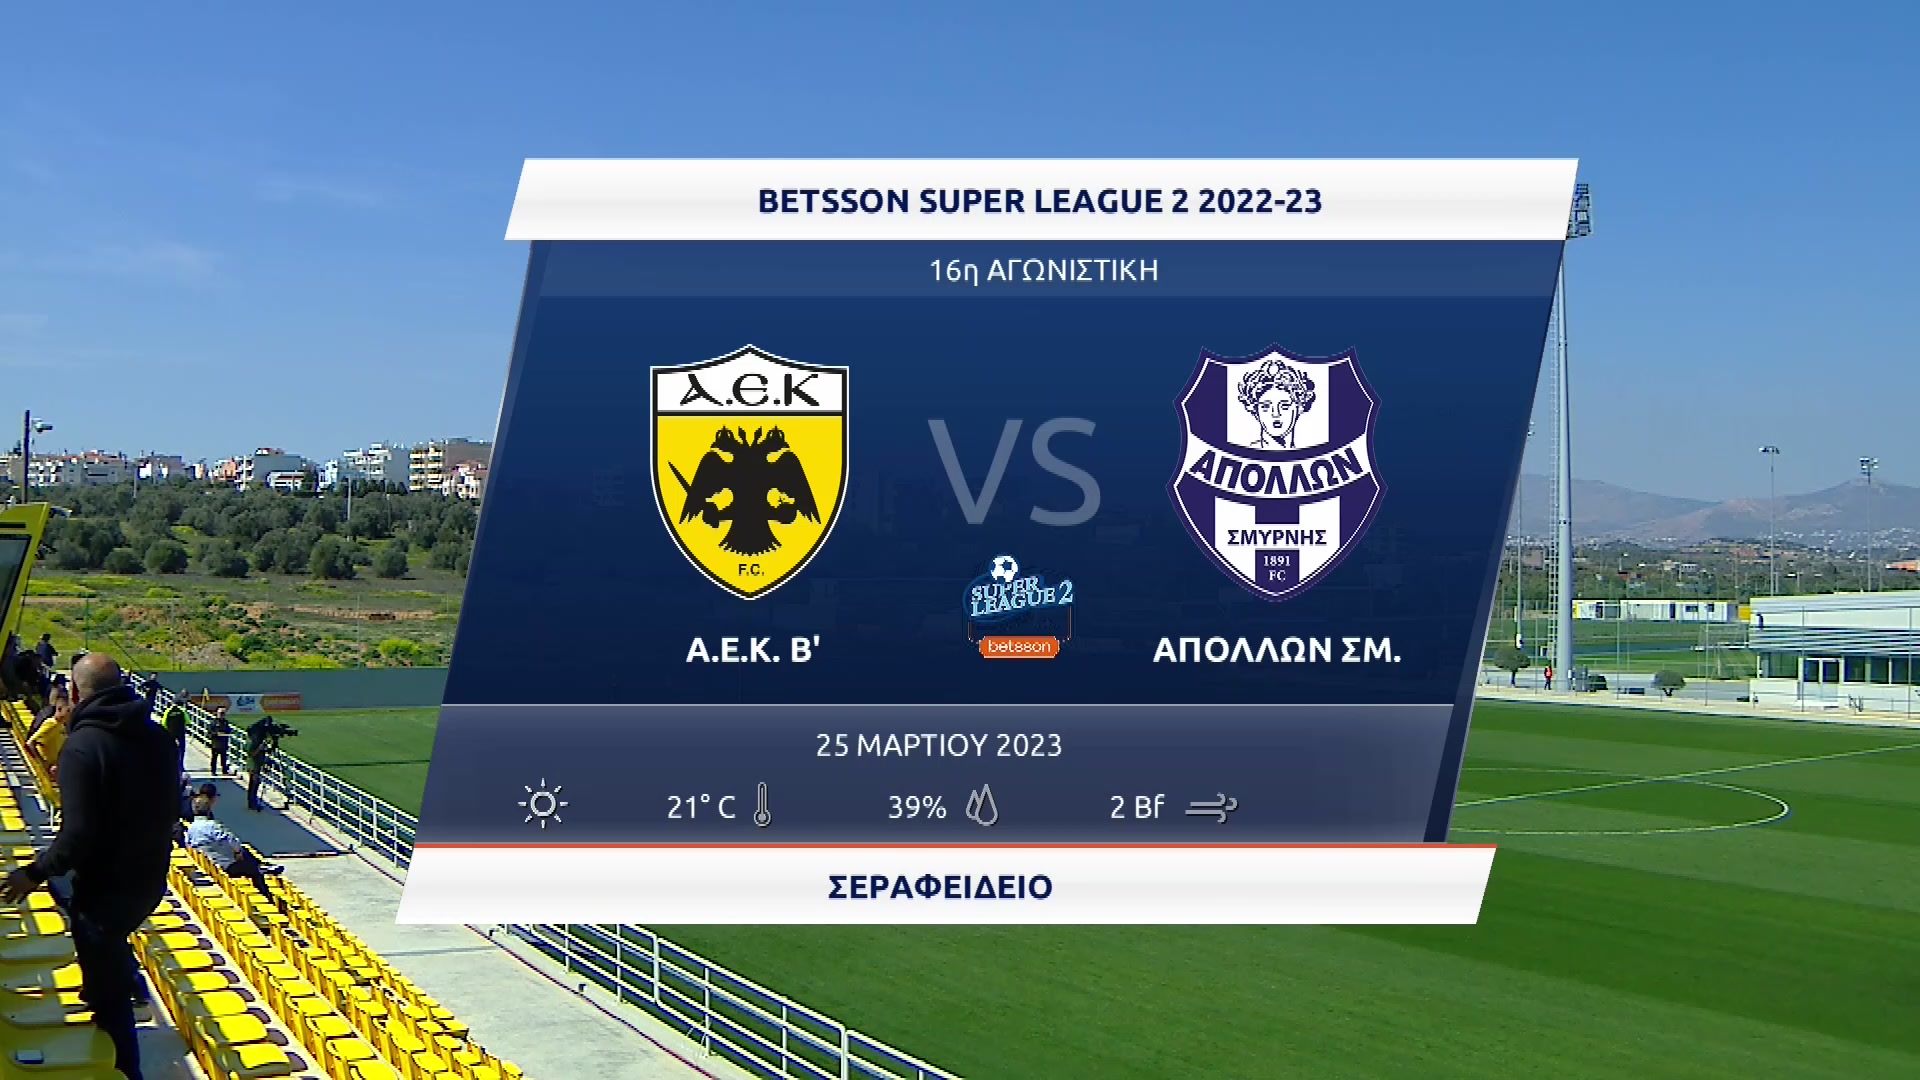 Super League 2 2022-2023 | Σάββατο 25 Μαρτίου 2023 – ΑΕΚ Β’ – Απόλλων Σμύρνης